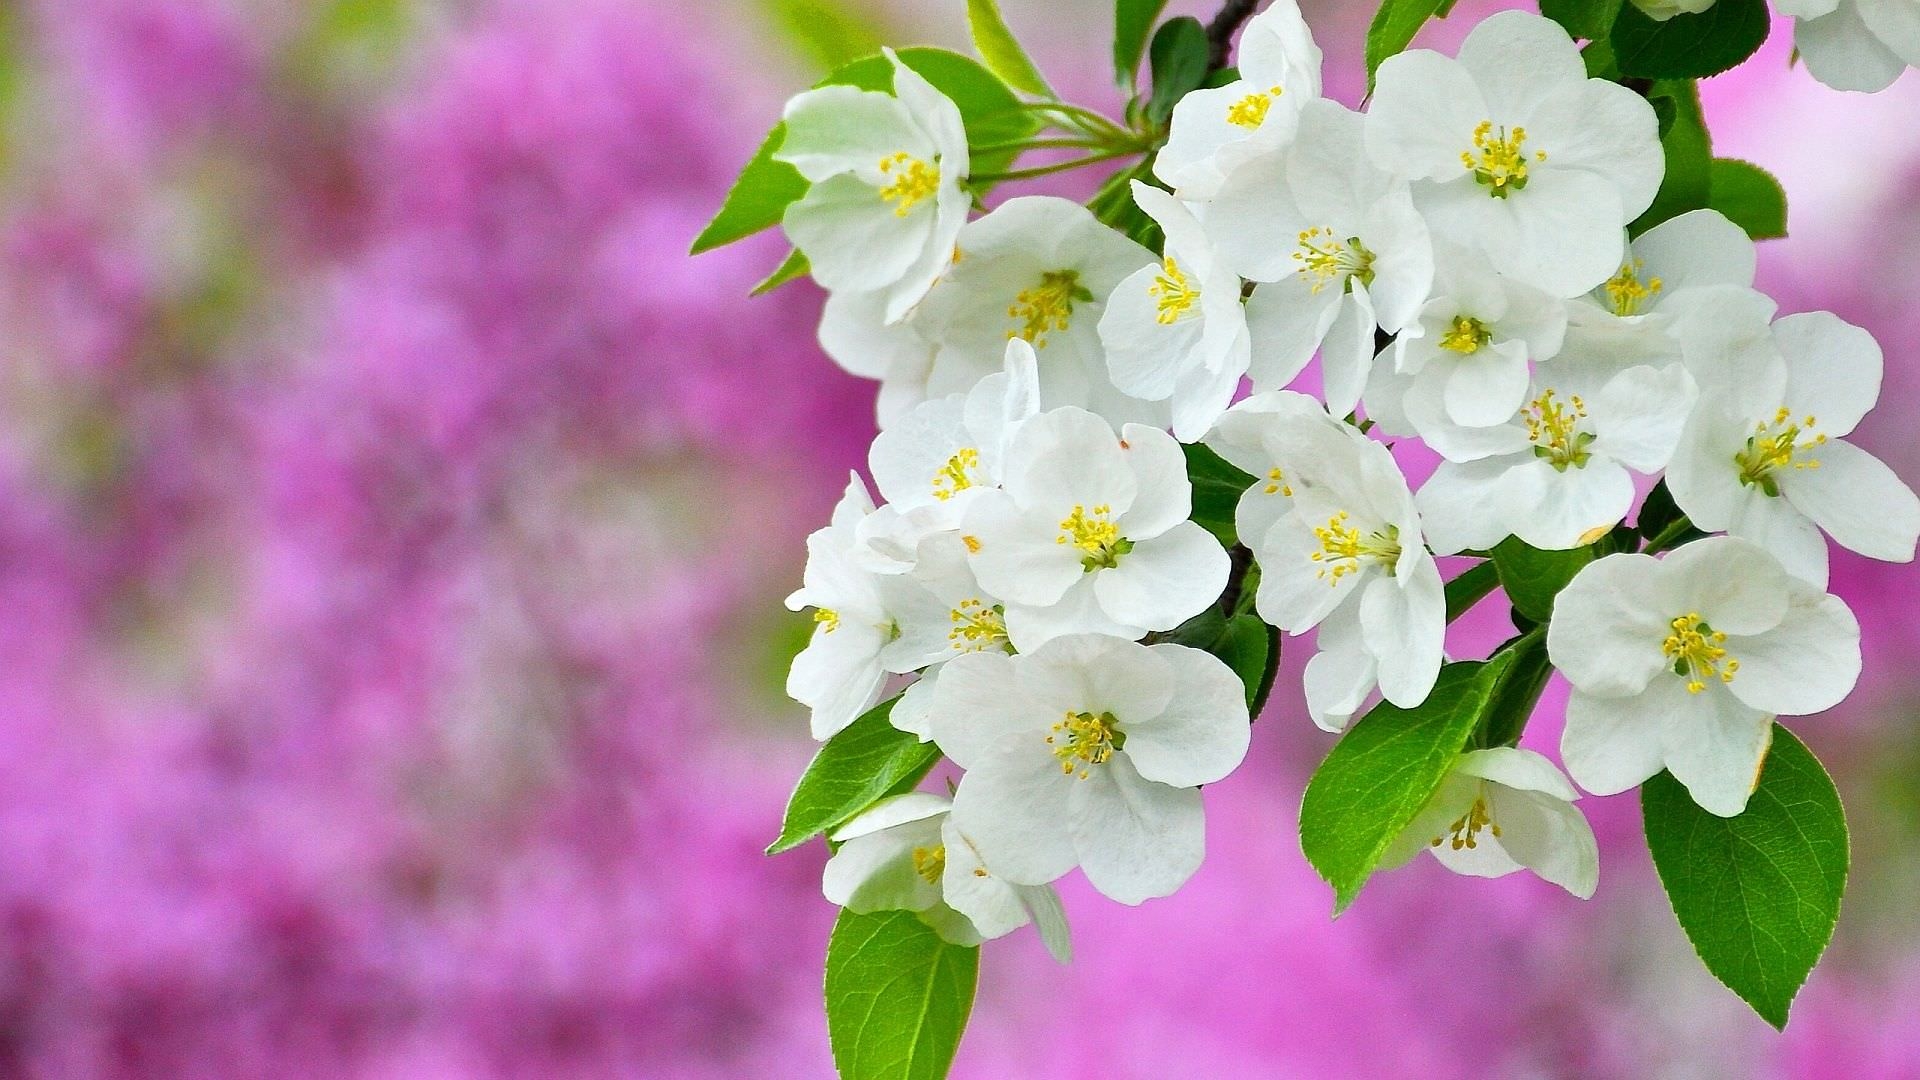 primavera wallpaper hd,fiore,pianta fiorita,pianta,bianca,petalo